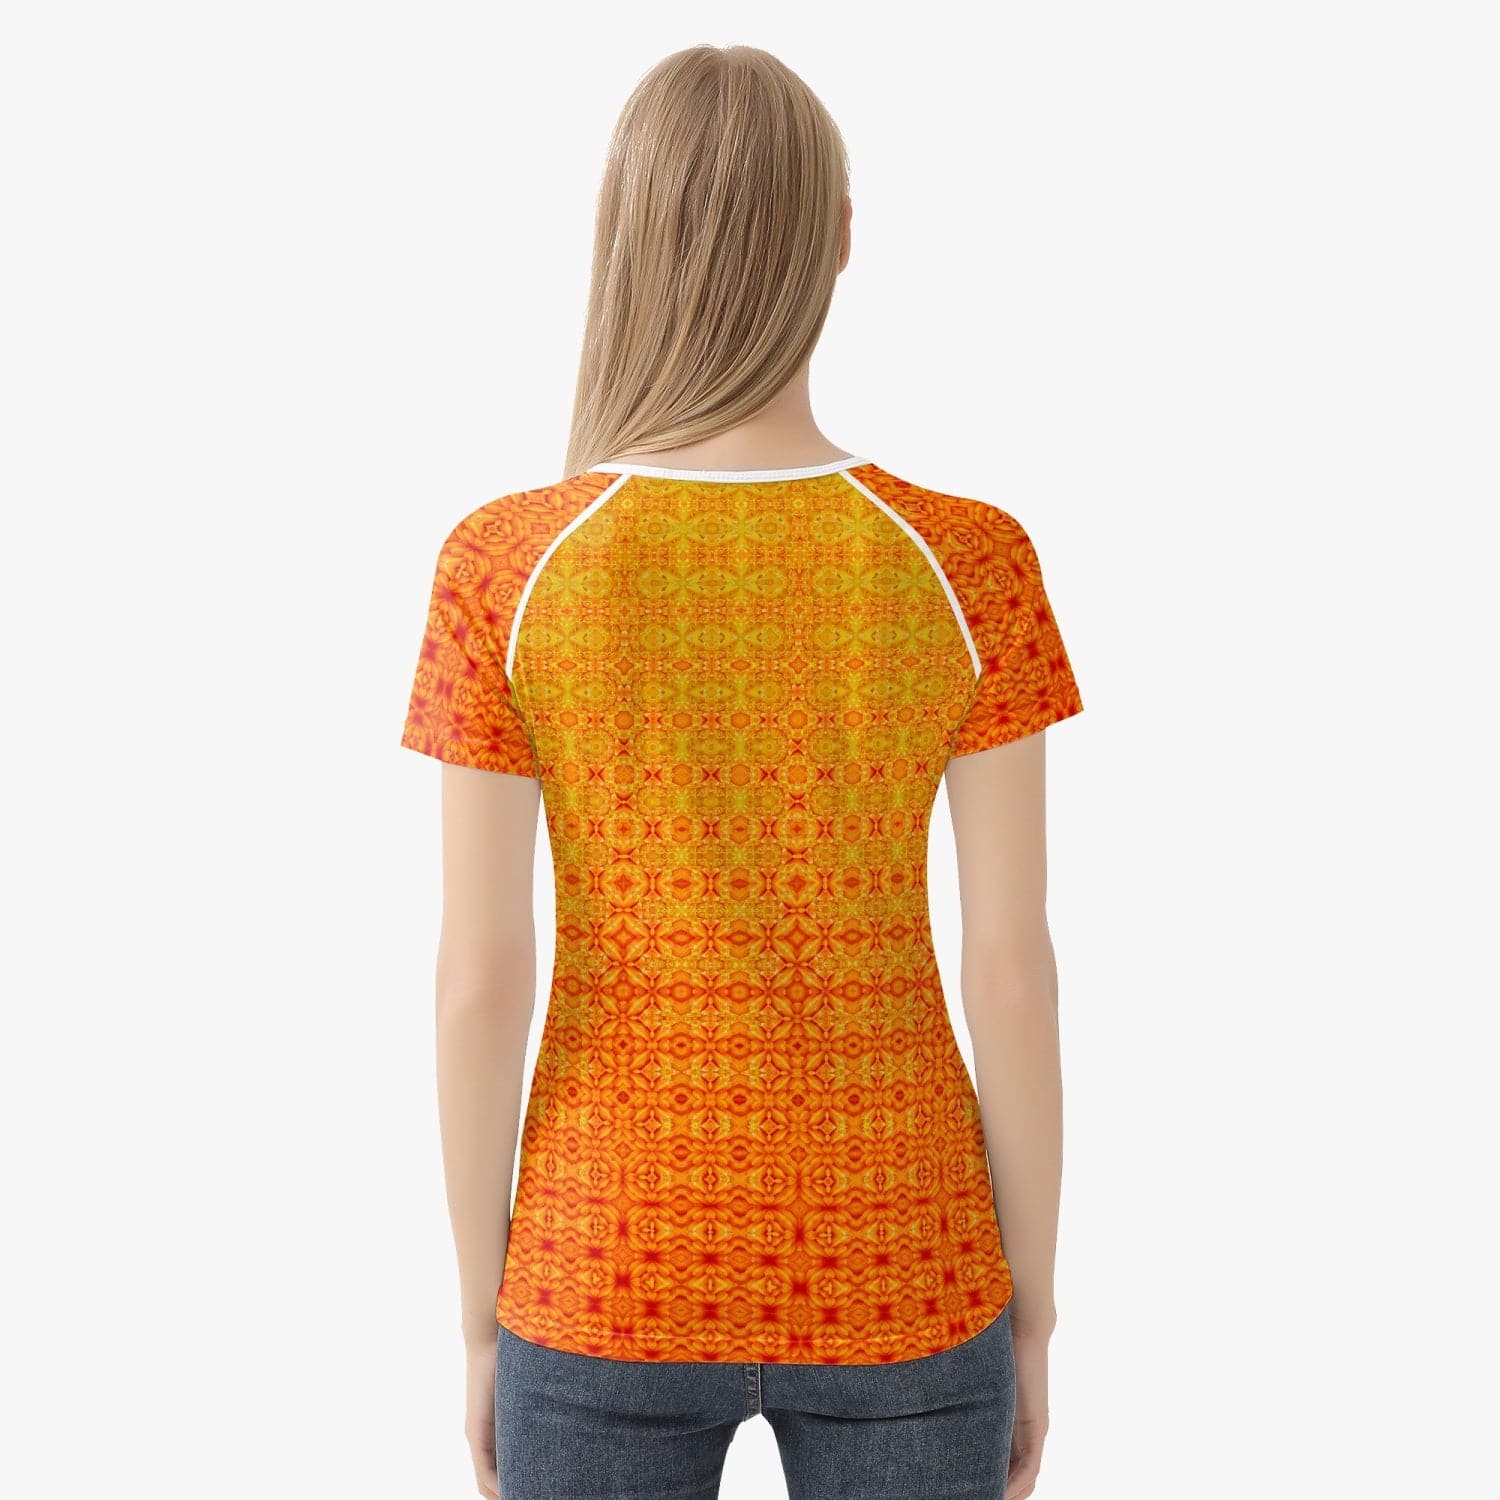 Solar Plexus Chacra  Handmade Yoga Top for  Women sports T-shirt, by Sensus Studio Design